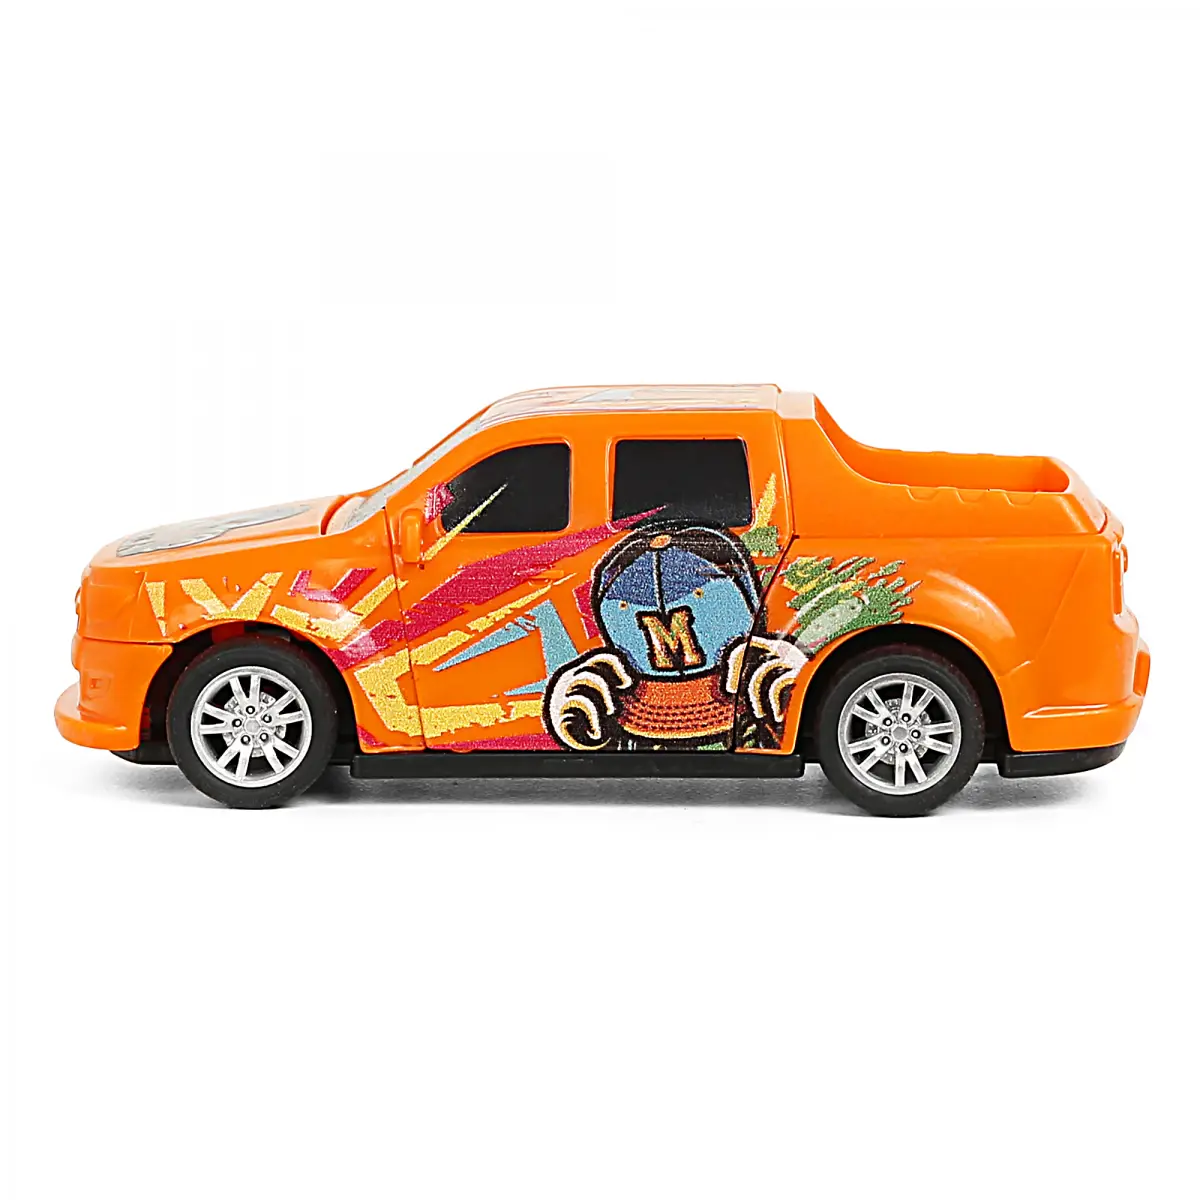 Ralleyz Pull Back Crash Car, 2 Modes Racing Stunt Vehicle Toy, Crash Car, Racing Toy, Friction High Speed Car, Kids for 3Y+, Orange